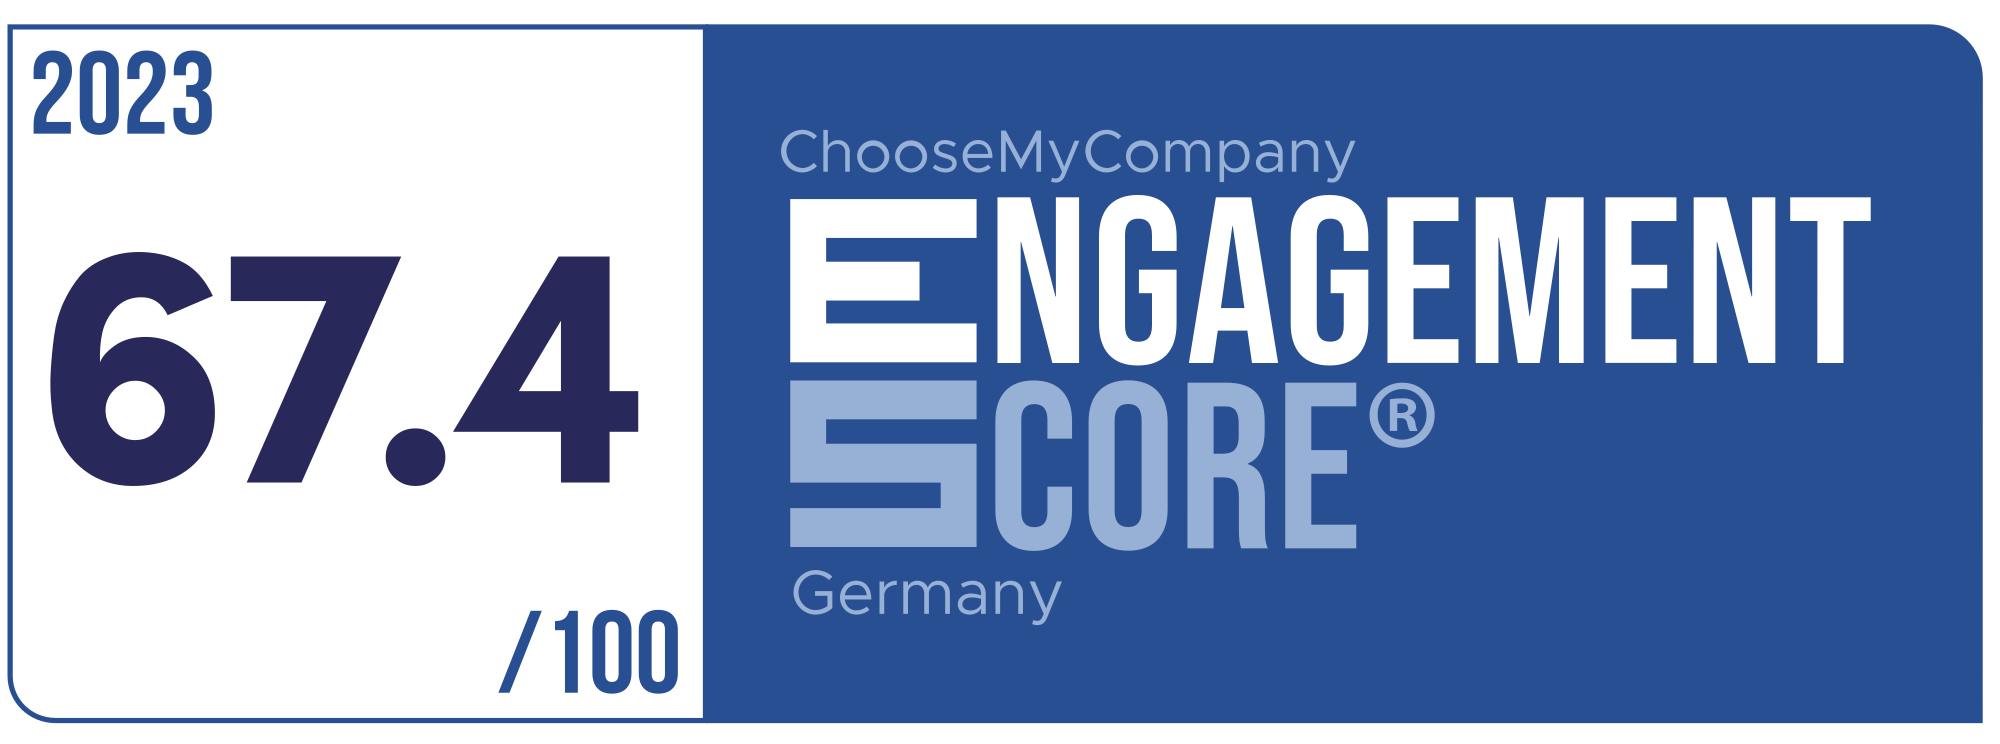 Label Engagement Score 2023 Germany